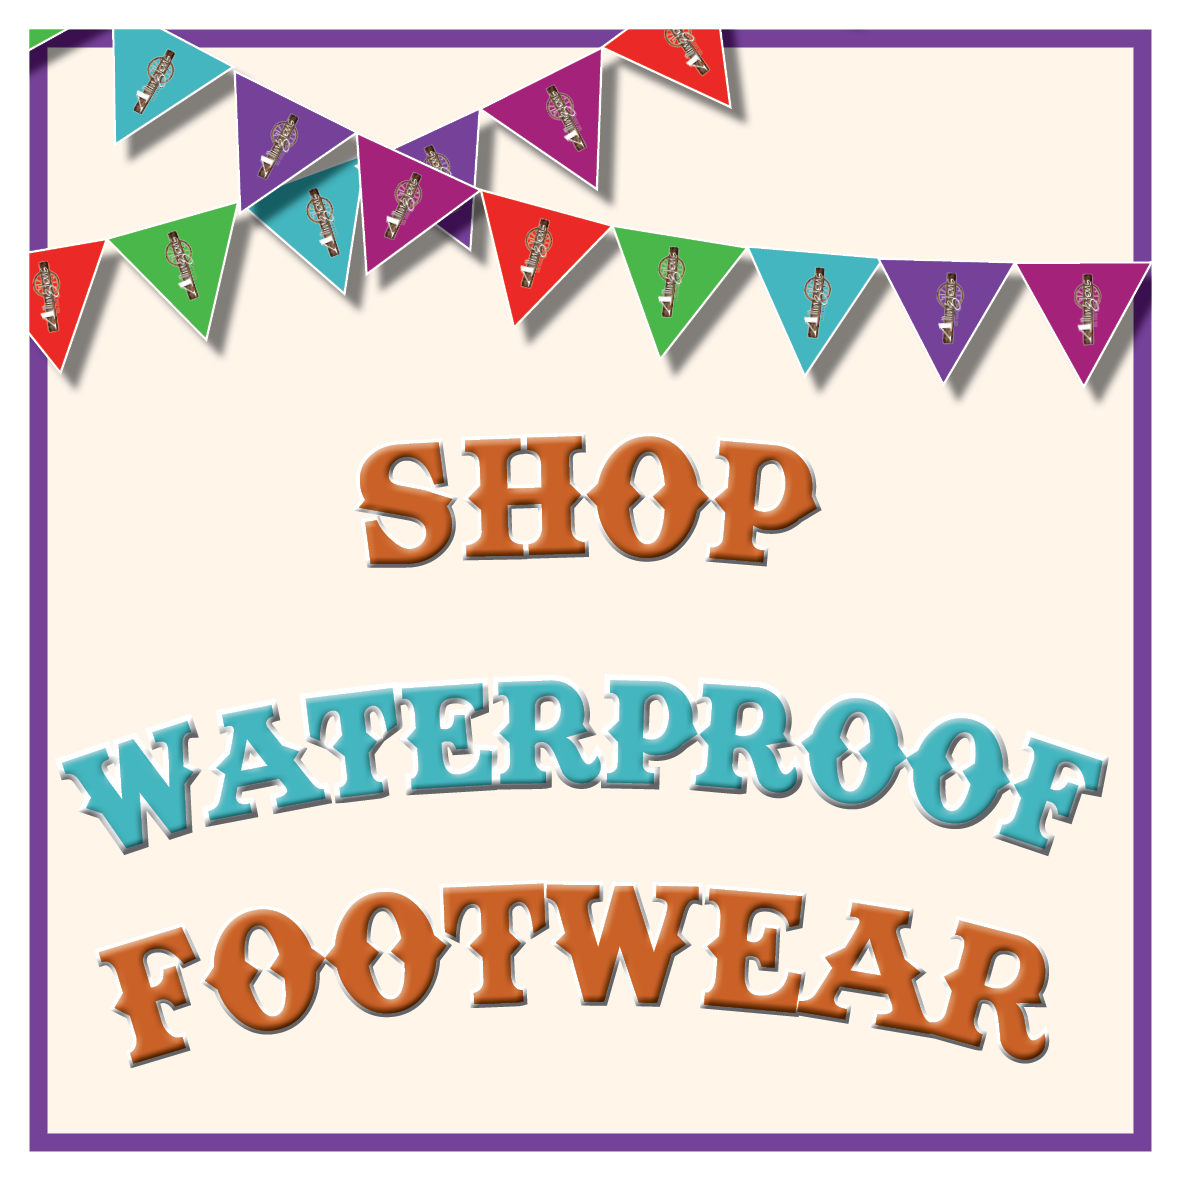 Shop Waterproof Footwear